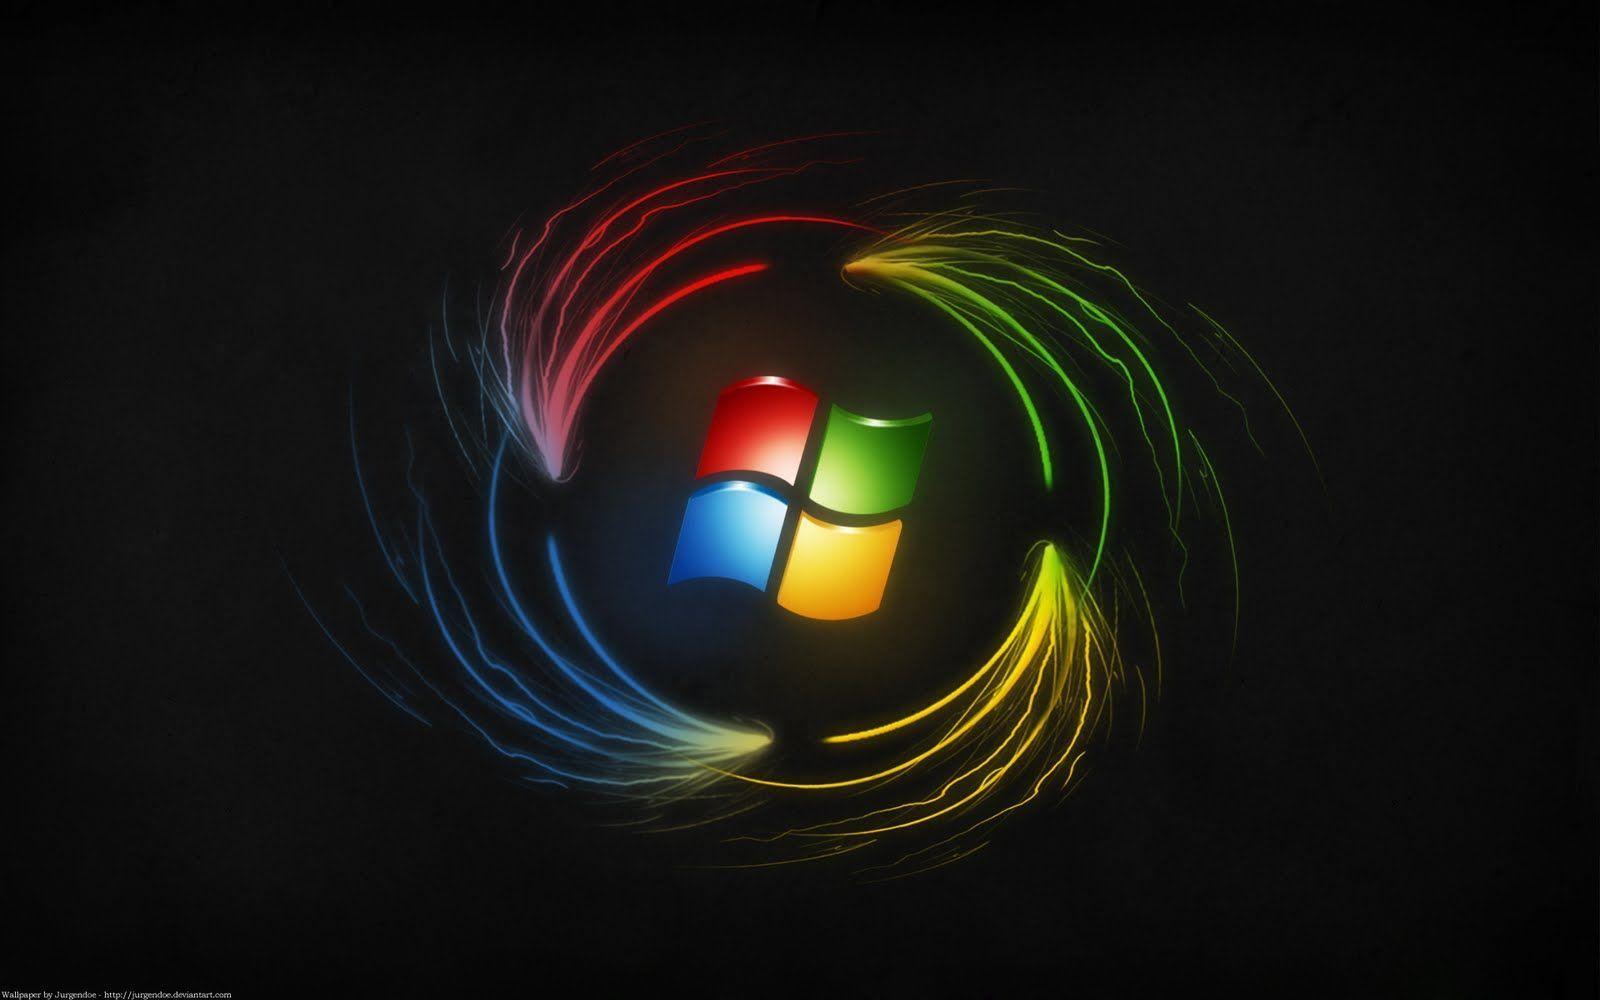 Windows 8 Background Themes